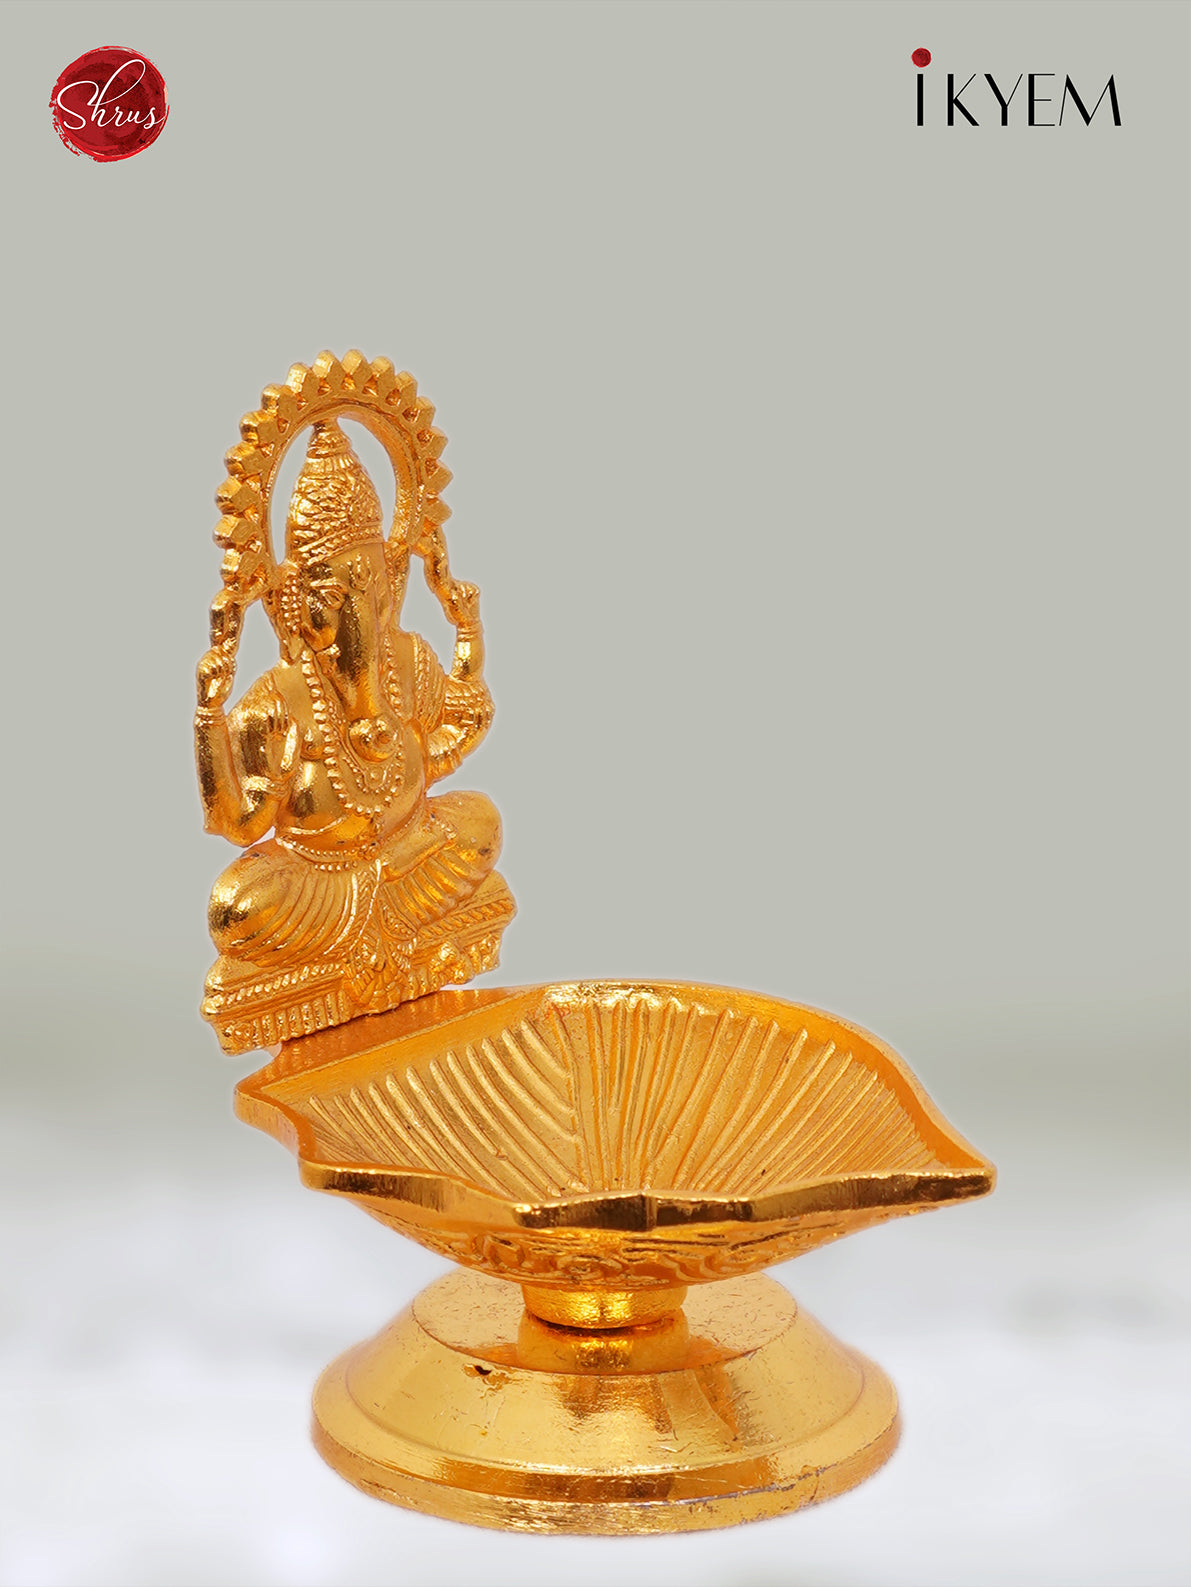 Antique Gold Plated Ganesha Lamp